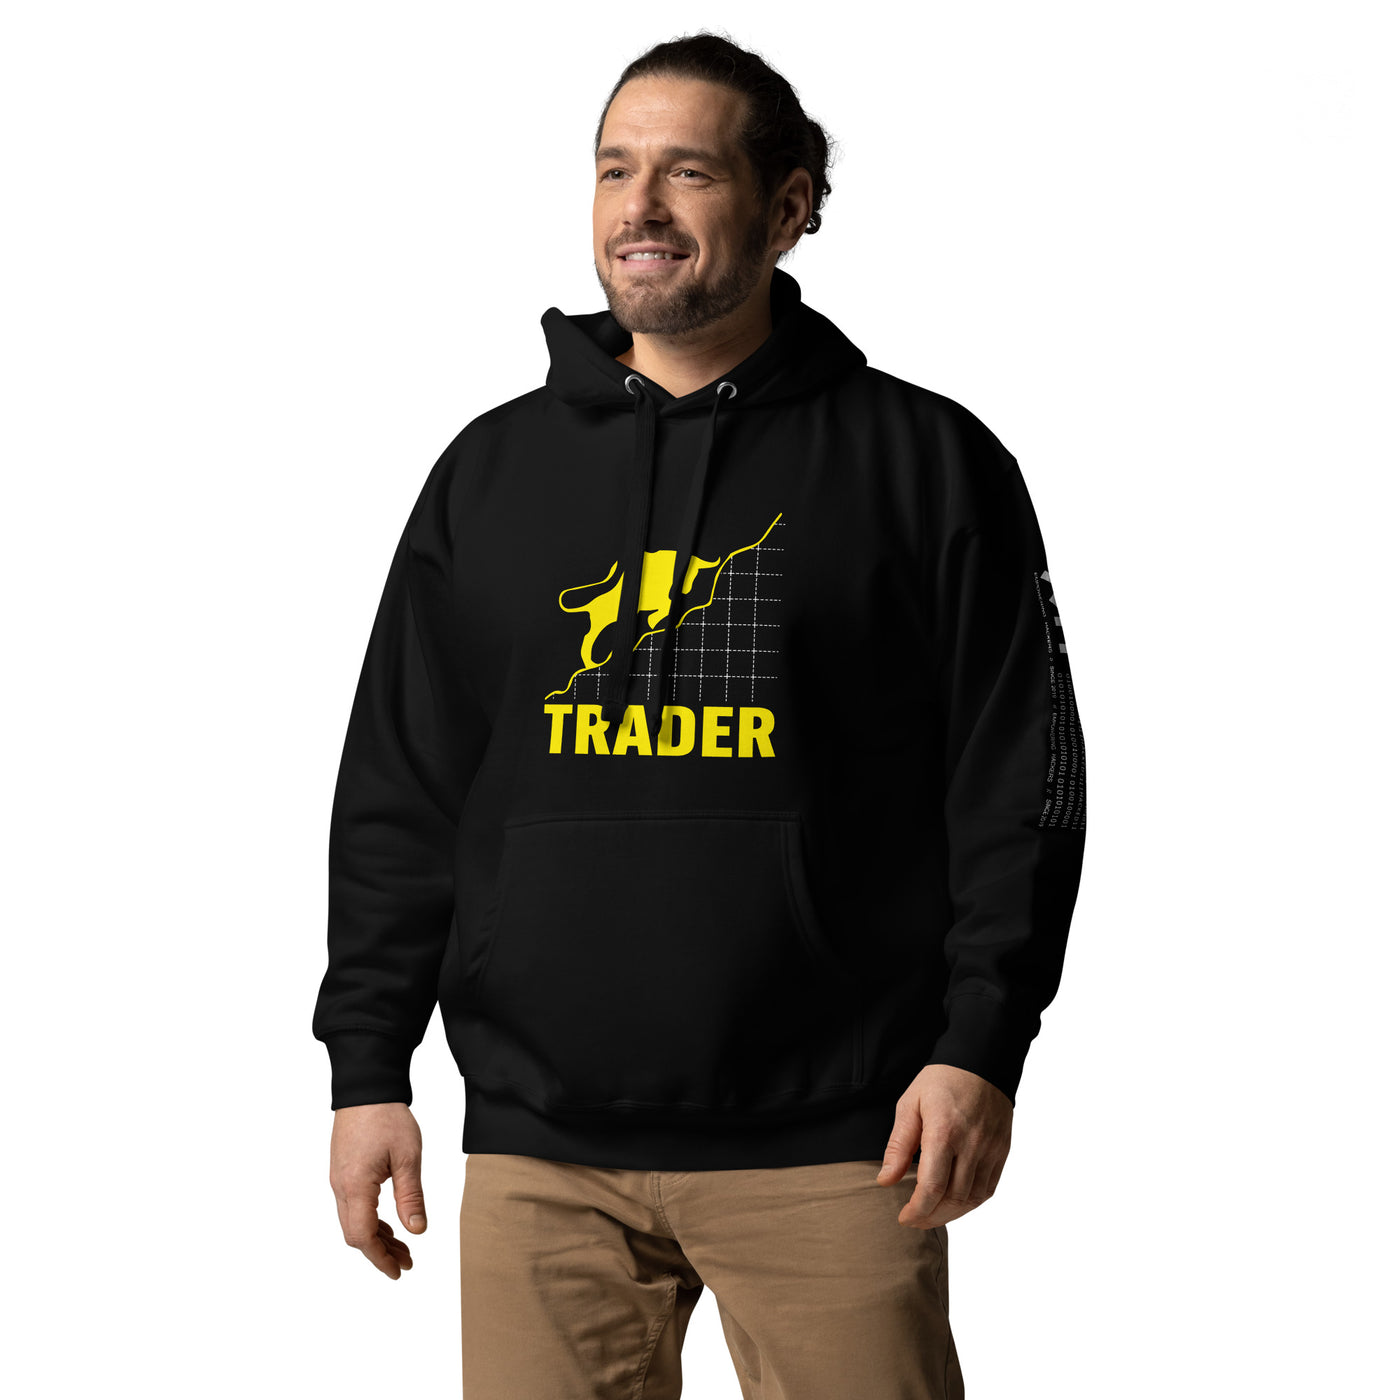 Trader - Unisex Hoodie